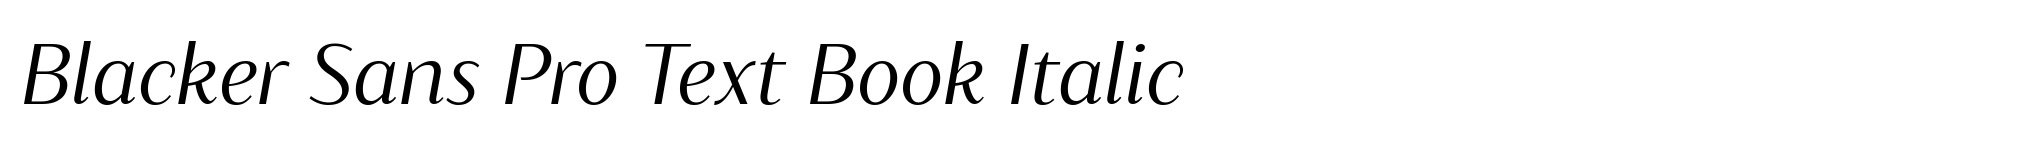 Blacker Sans Pro Text Book Italic image